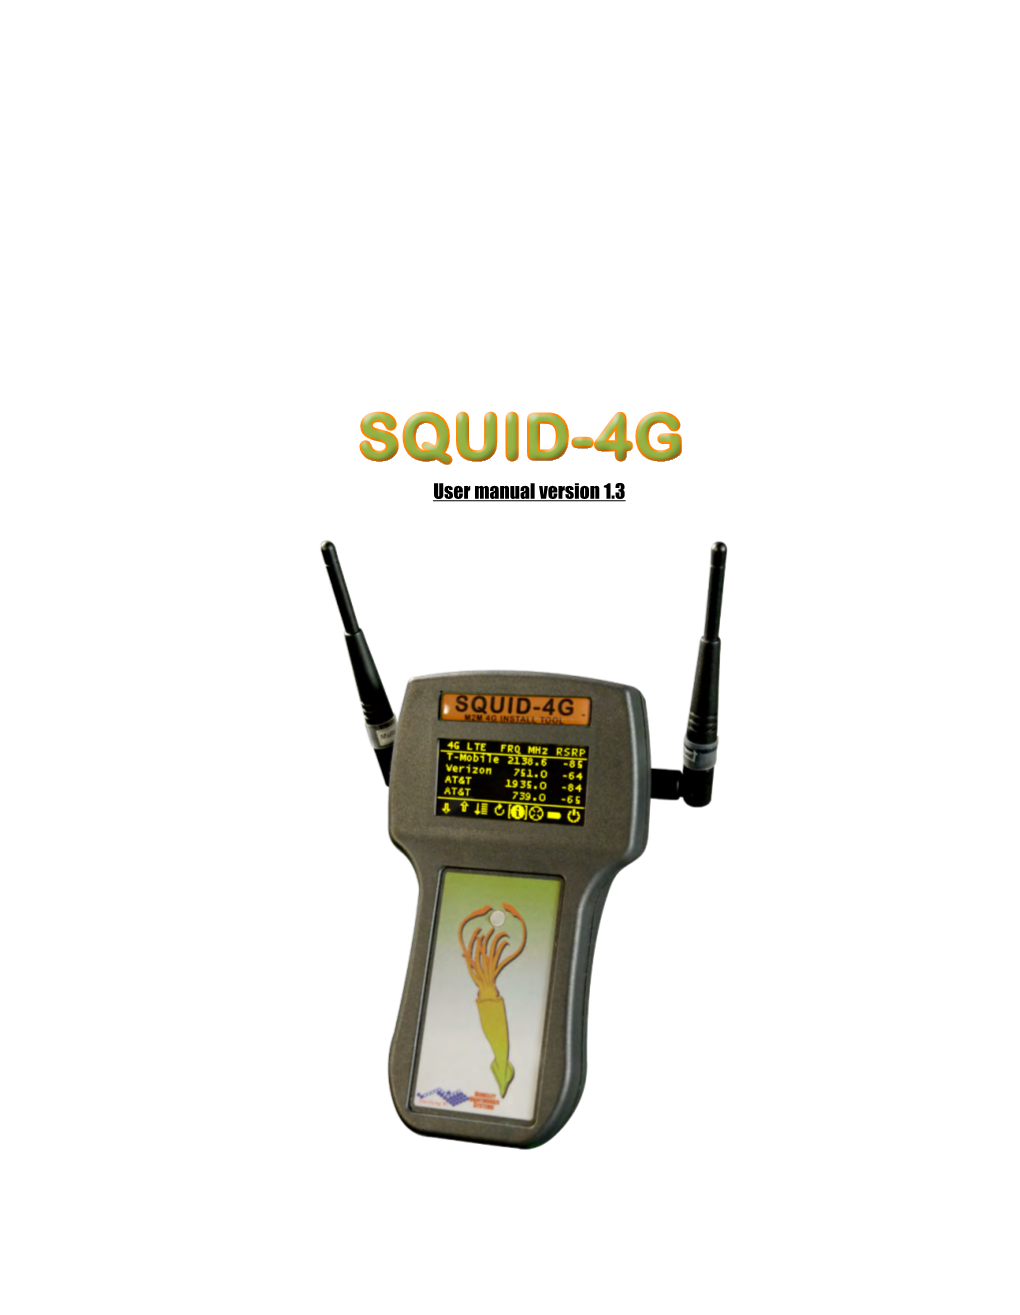 SQUID-4G User Manual Version 1.3 Contents